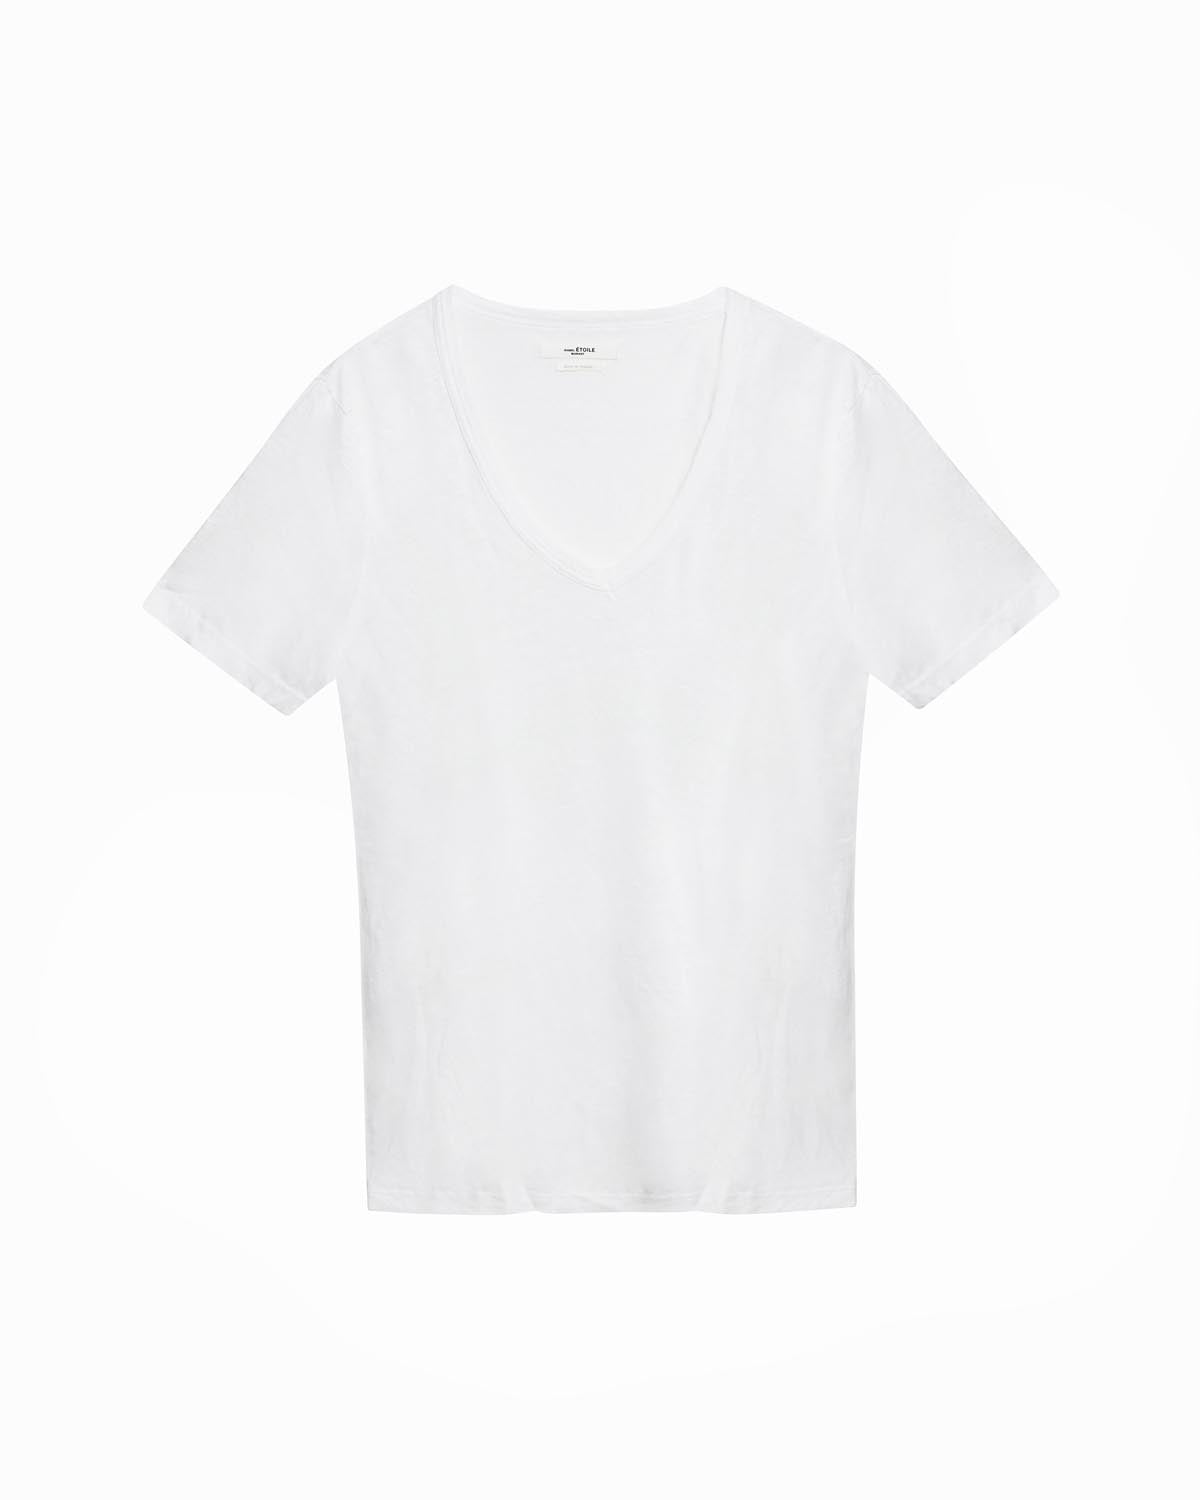 Kranger ティーシャツ Woman 白 2